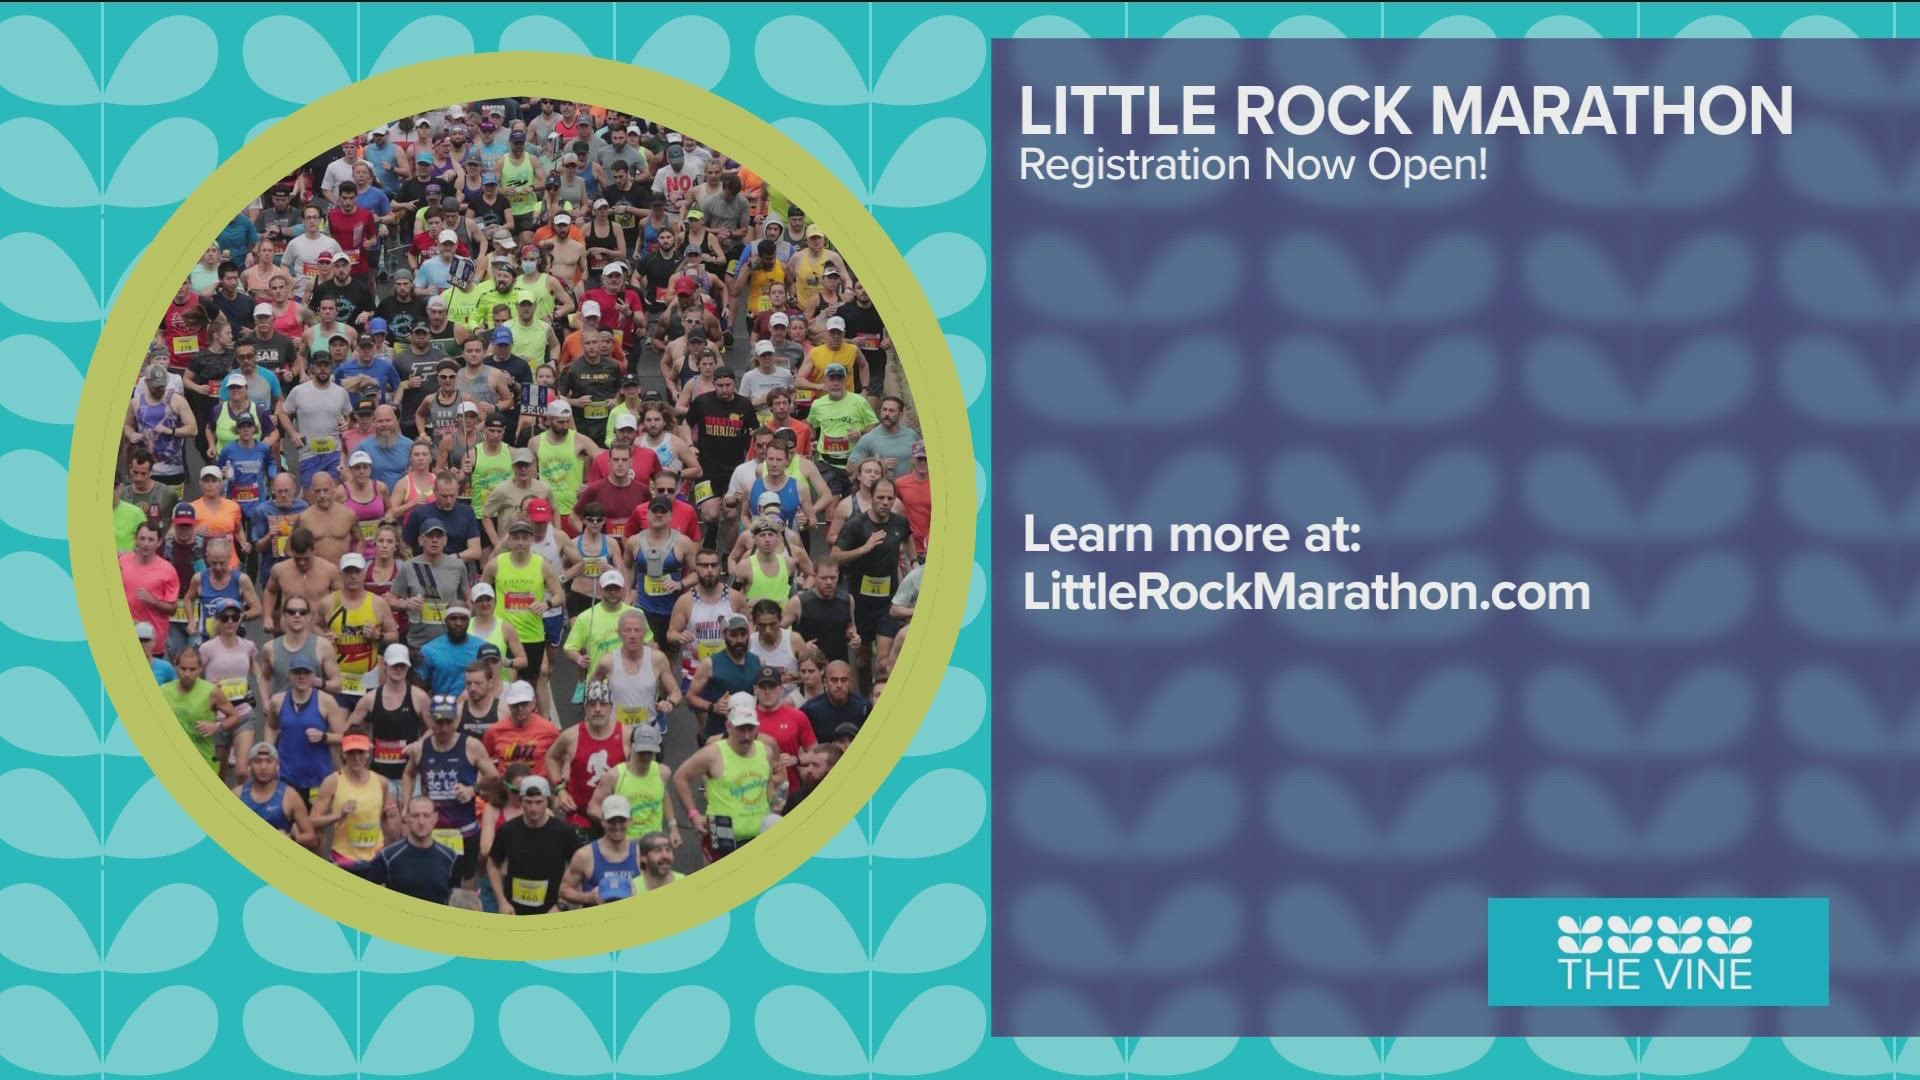 Sign-up now for the Little Rock Marathon. Just go to littlerockmarathon.com.